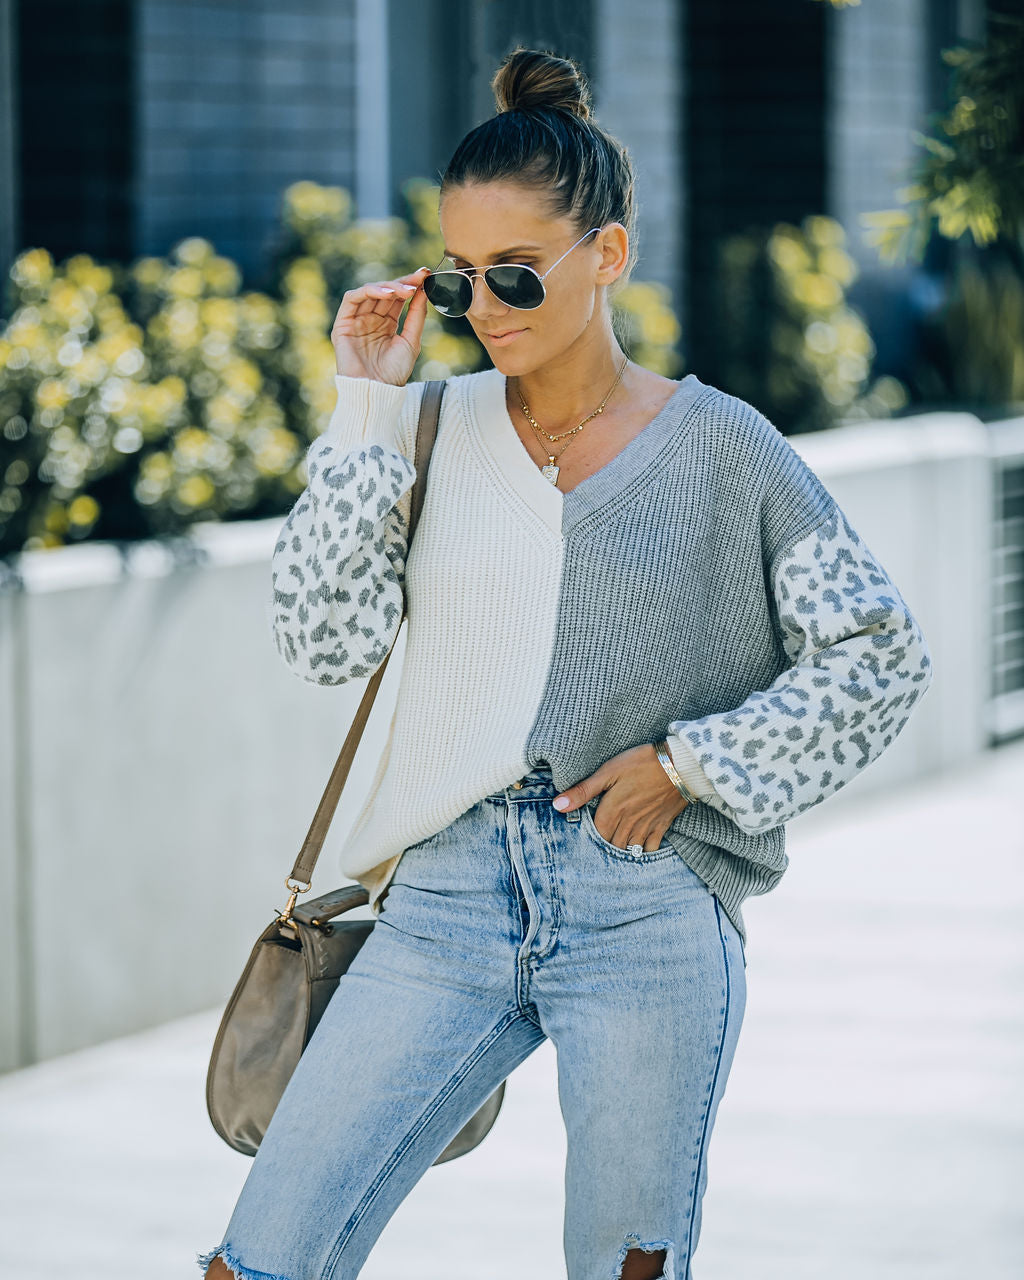 Change Of Heart Two-Tone Knit Leopard Sweater - Ivory/ Grey